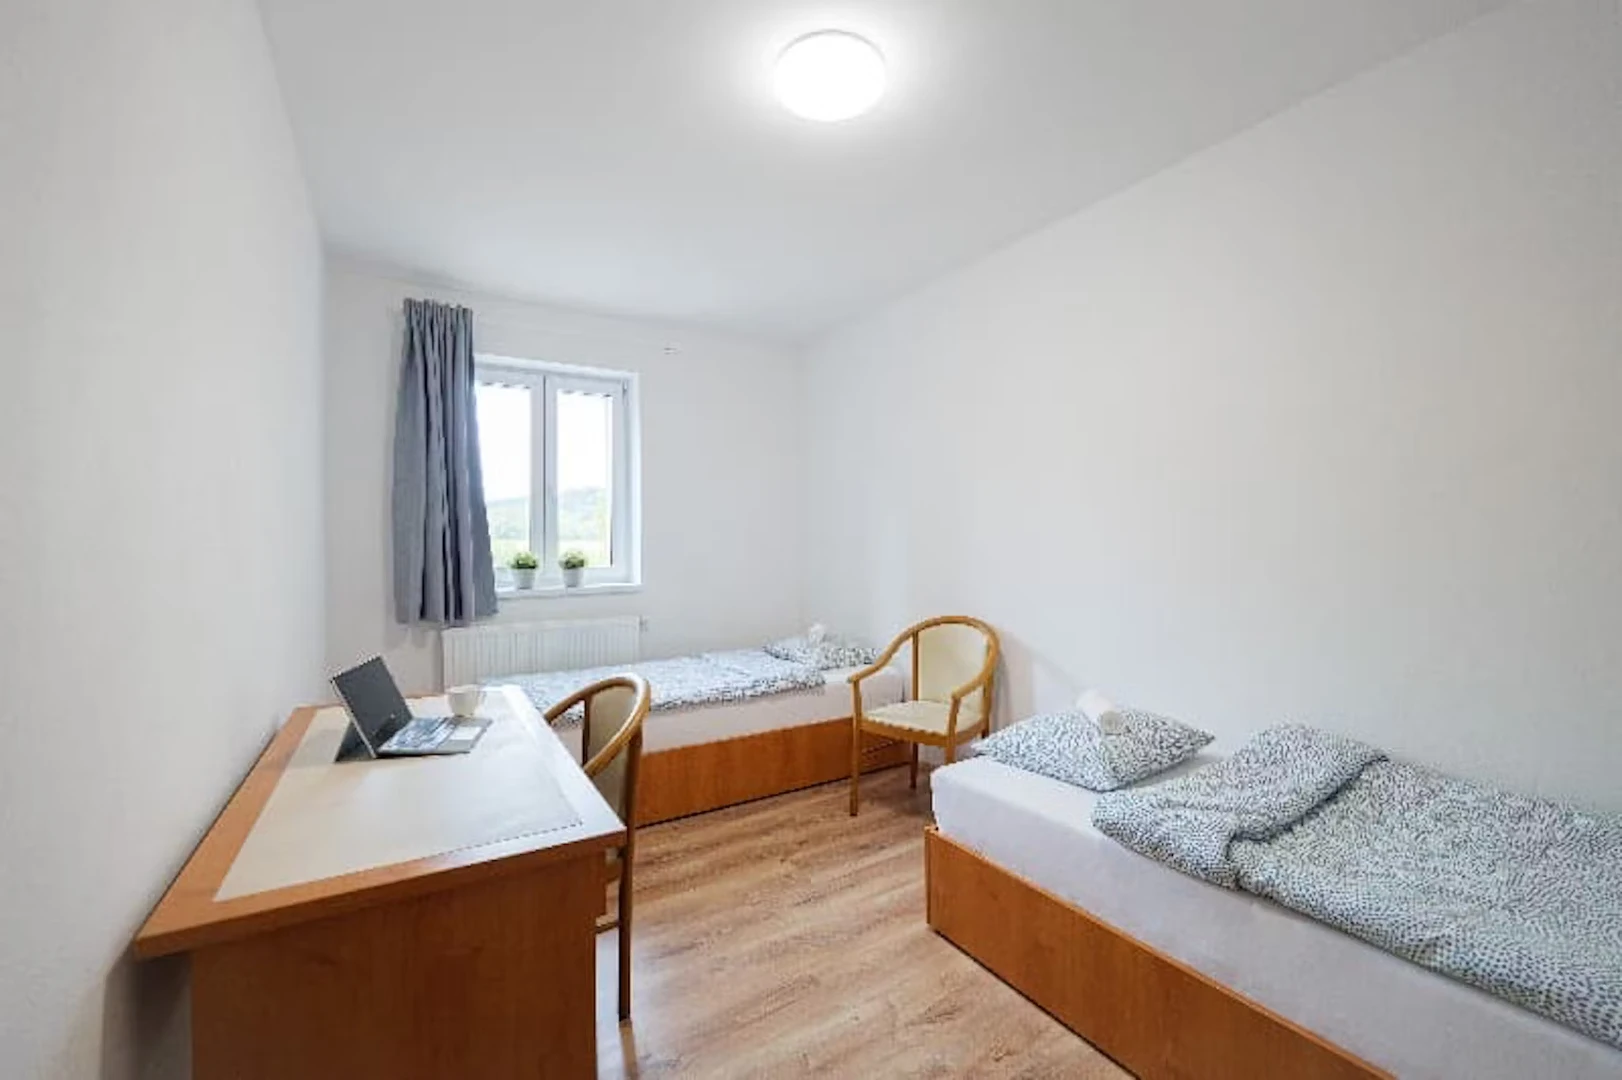 Shared room in 3-bedroom flat Ostrava